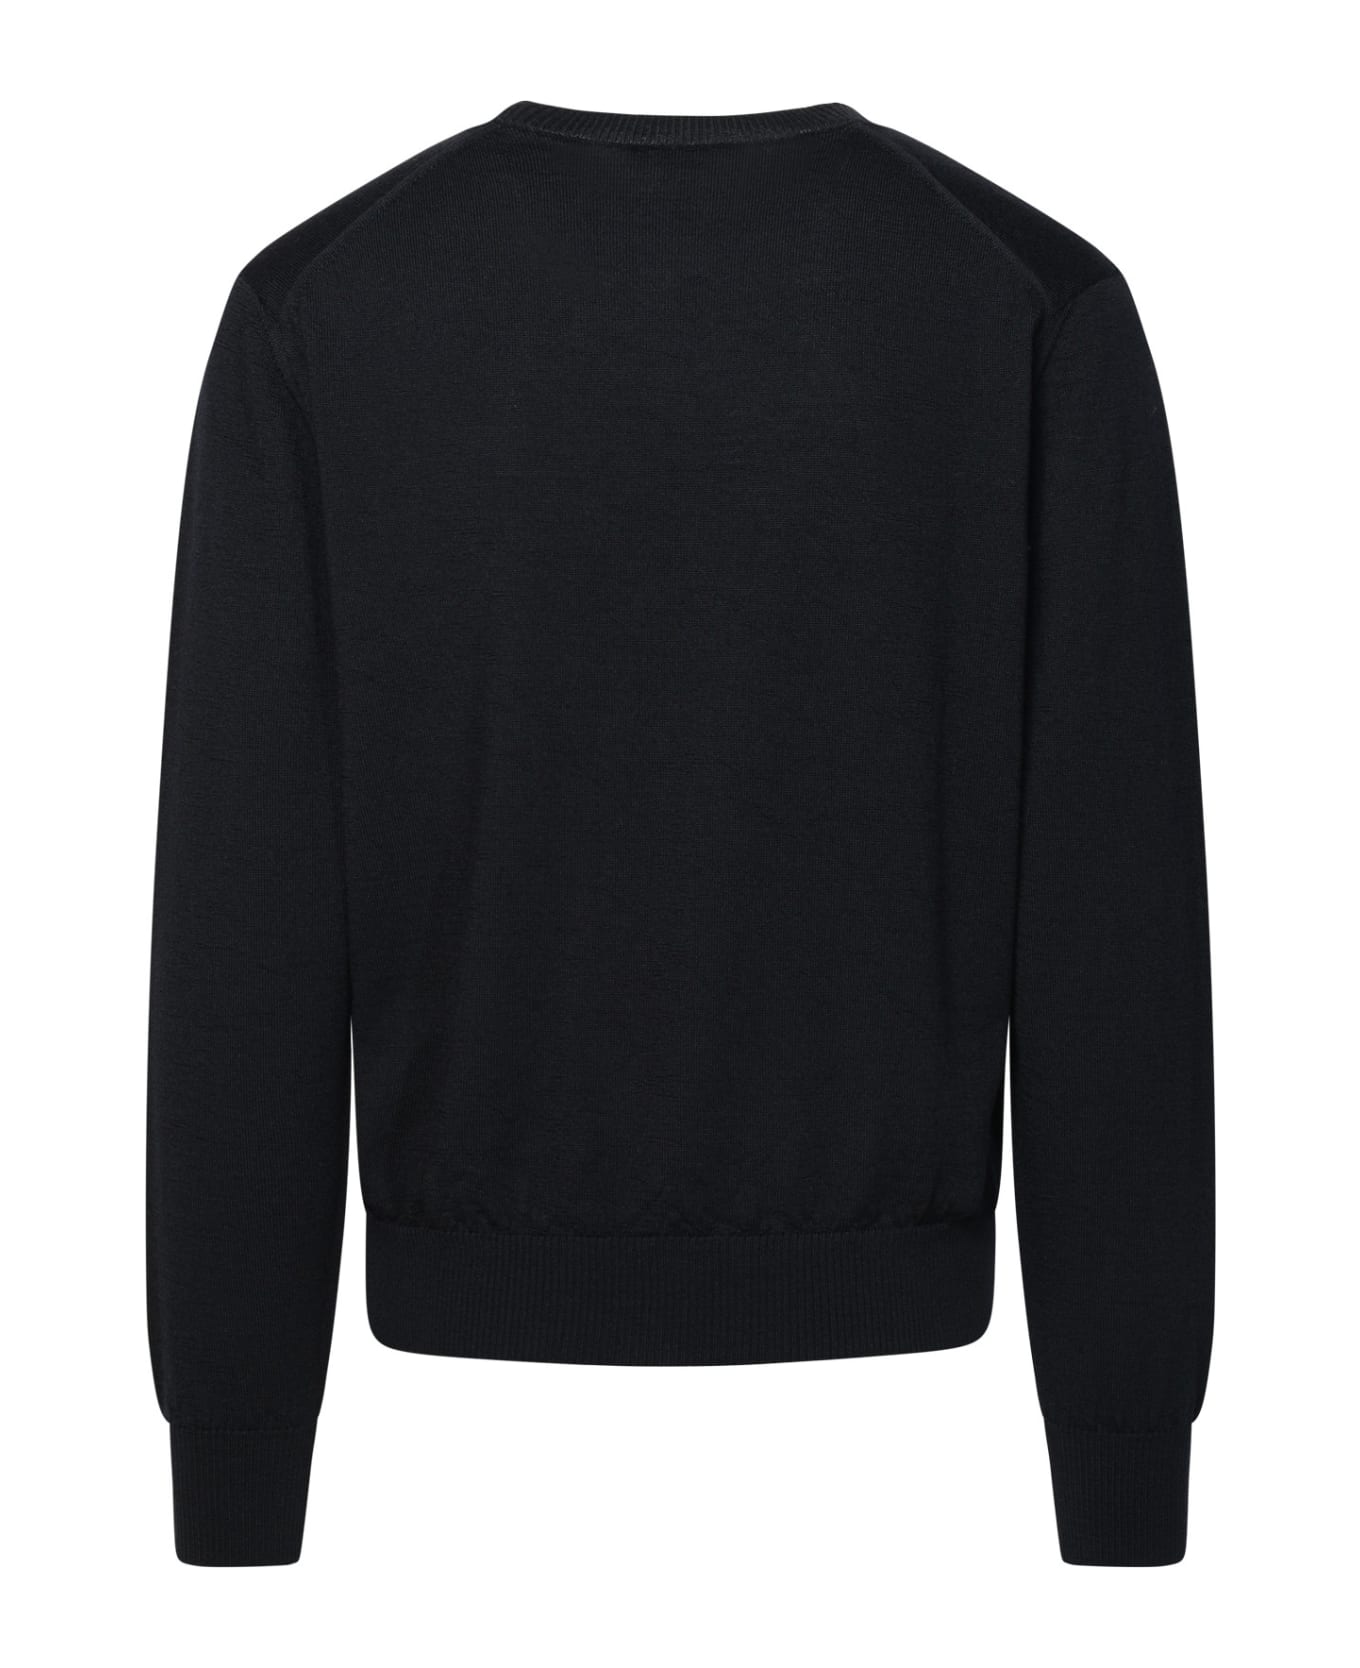 Ami Alexandre Mattiussi Black Merino Wool Sweater - Black